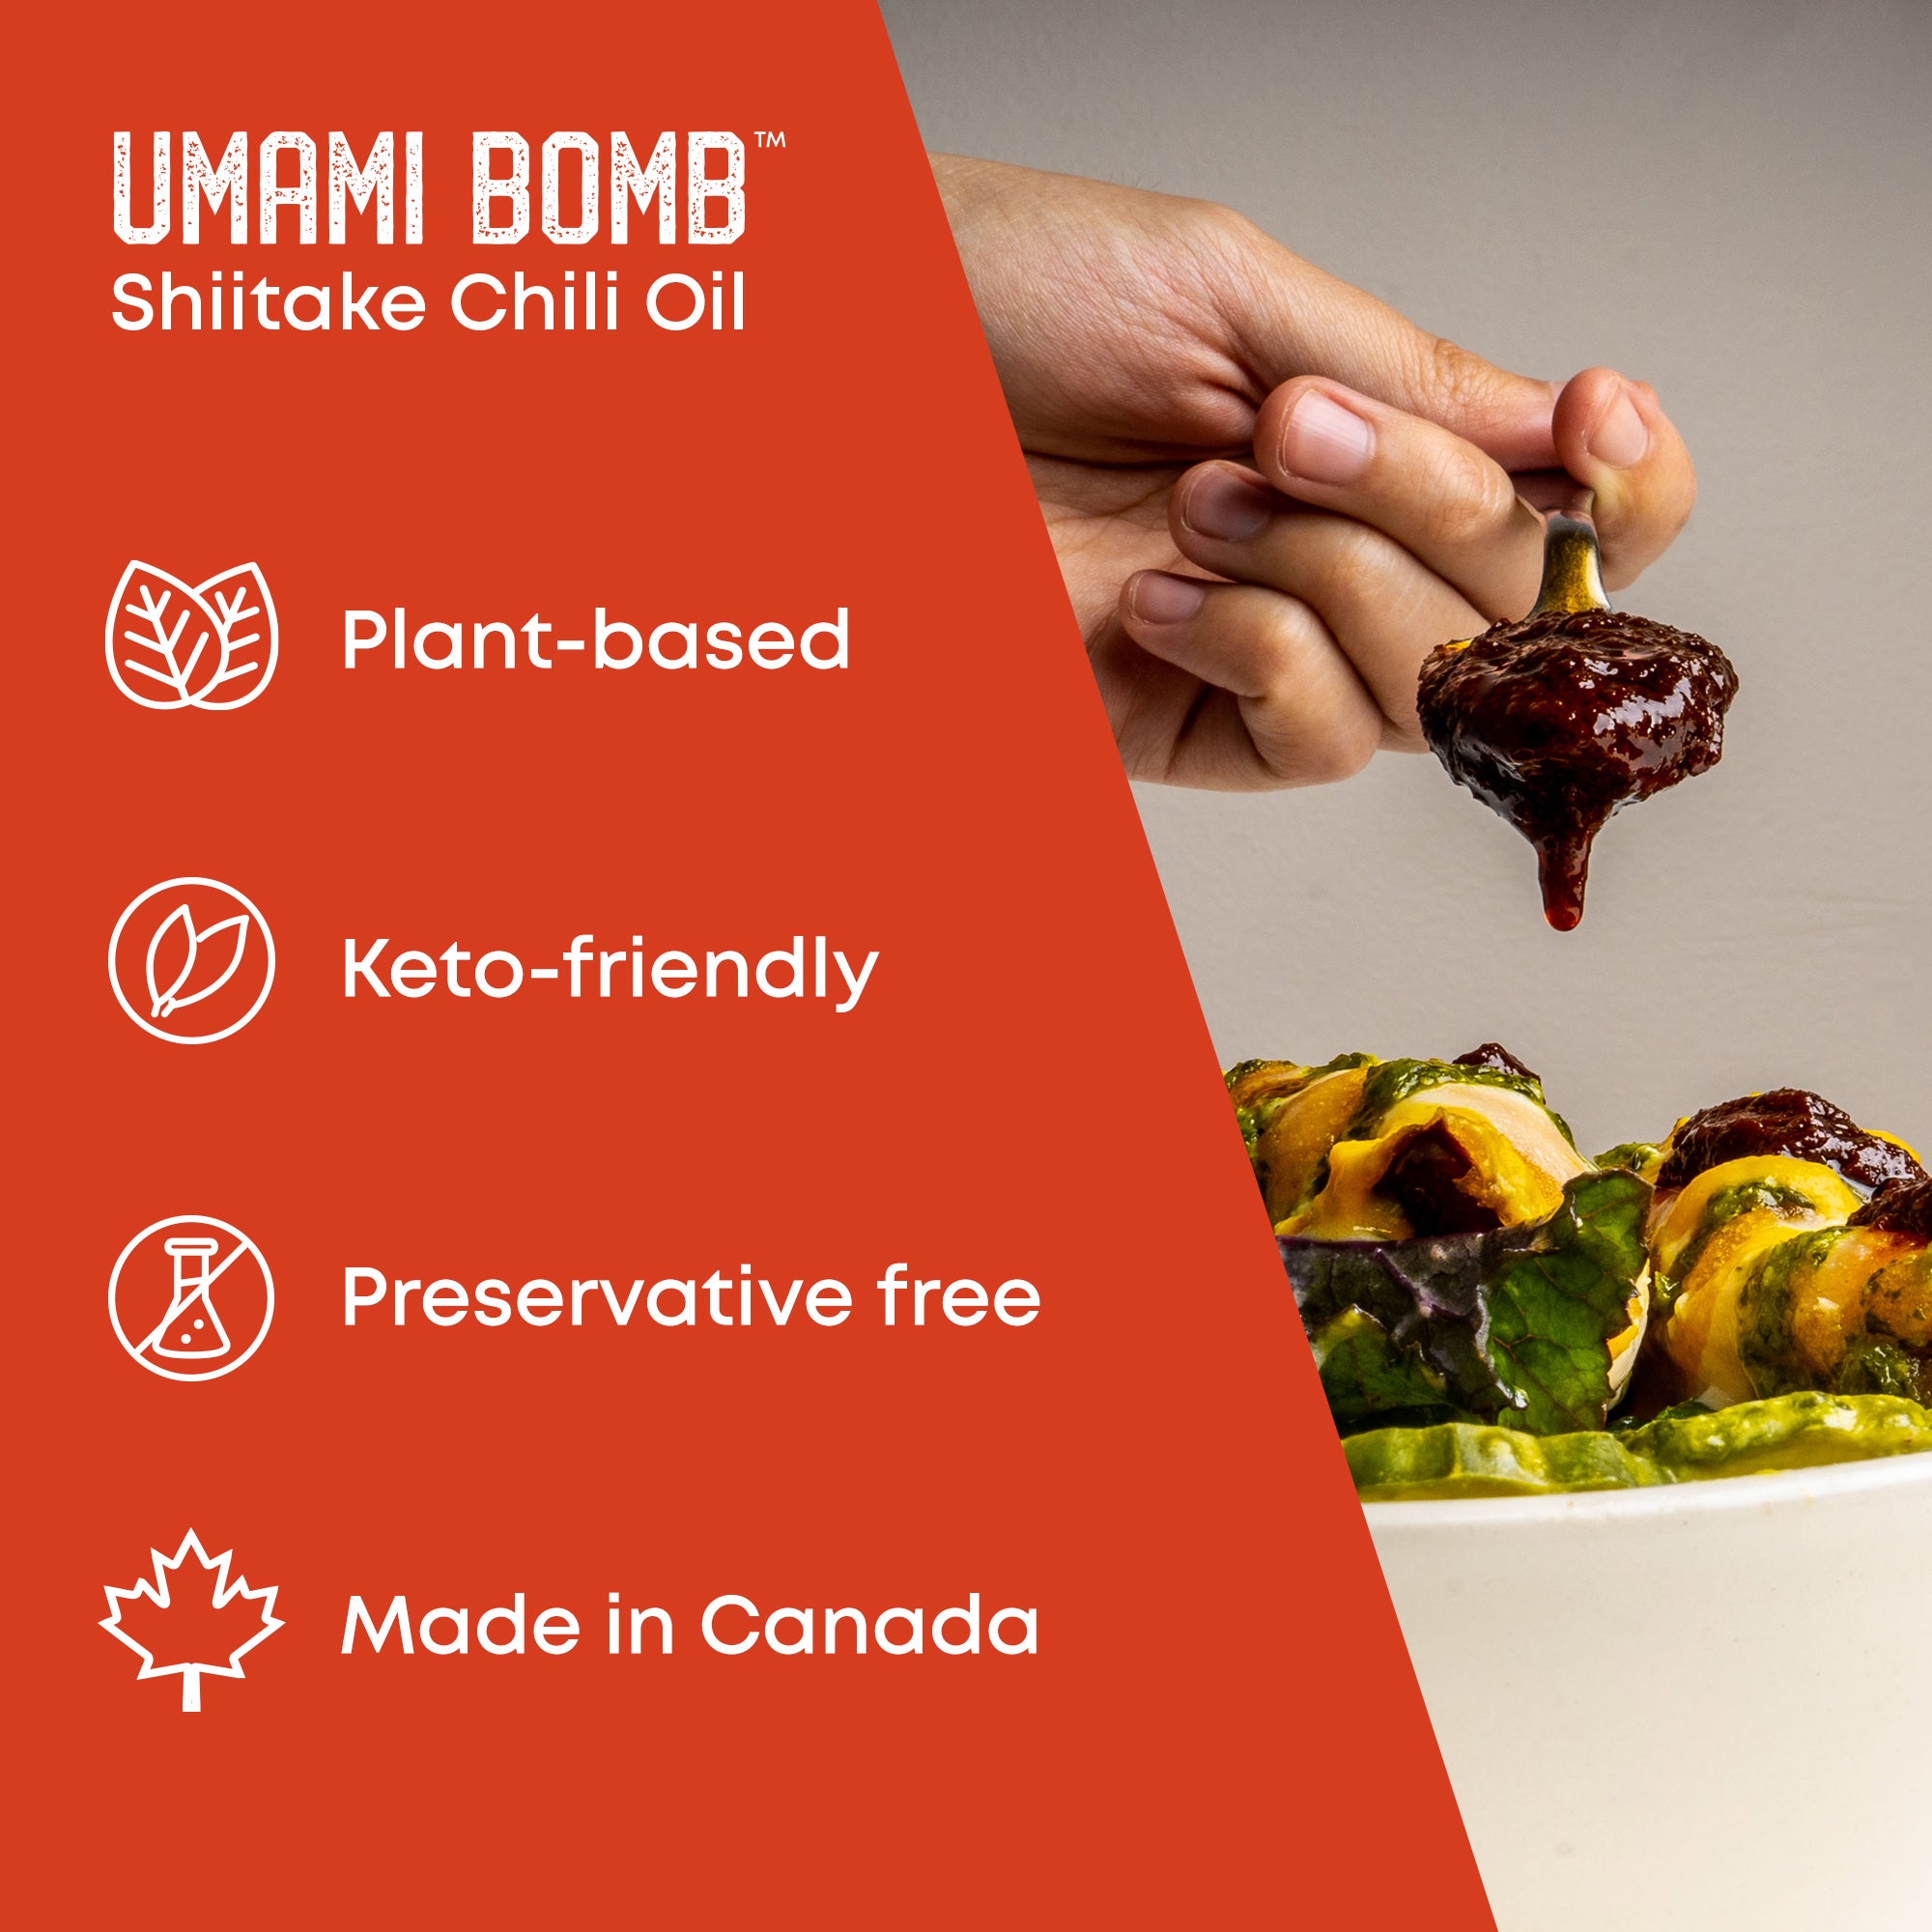 Umami Bomb Shiitake Chili Oil - Medium